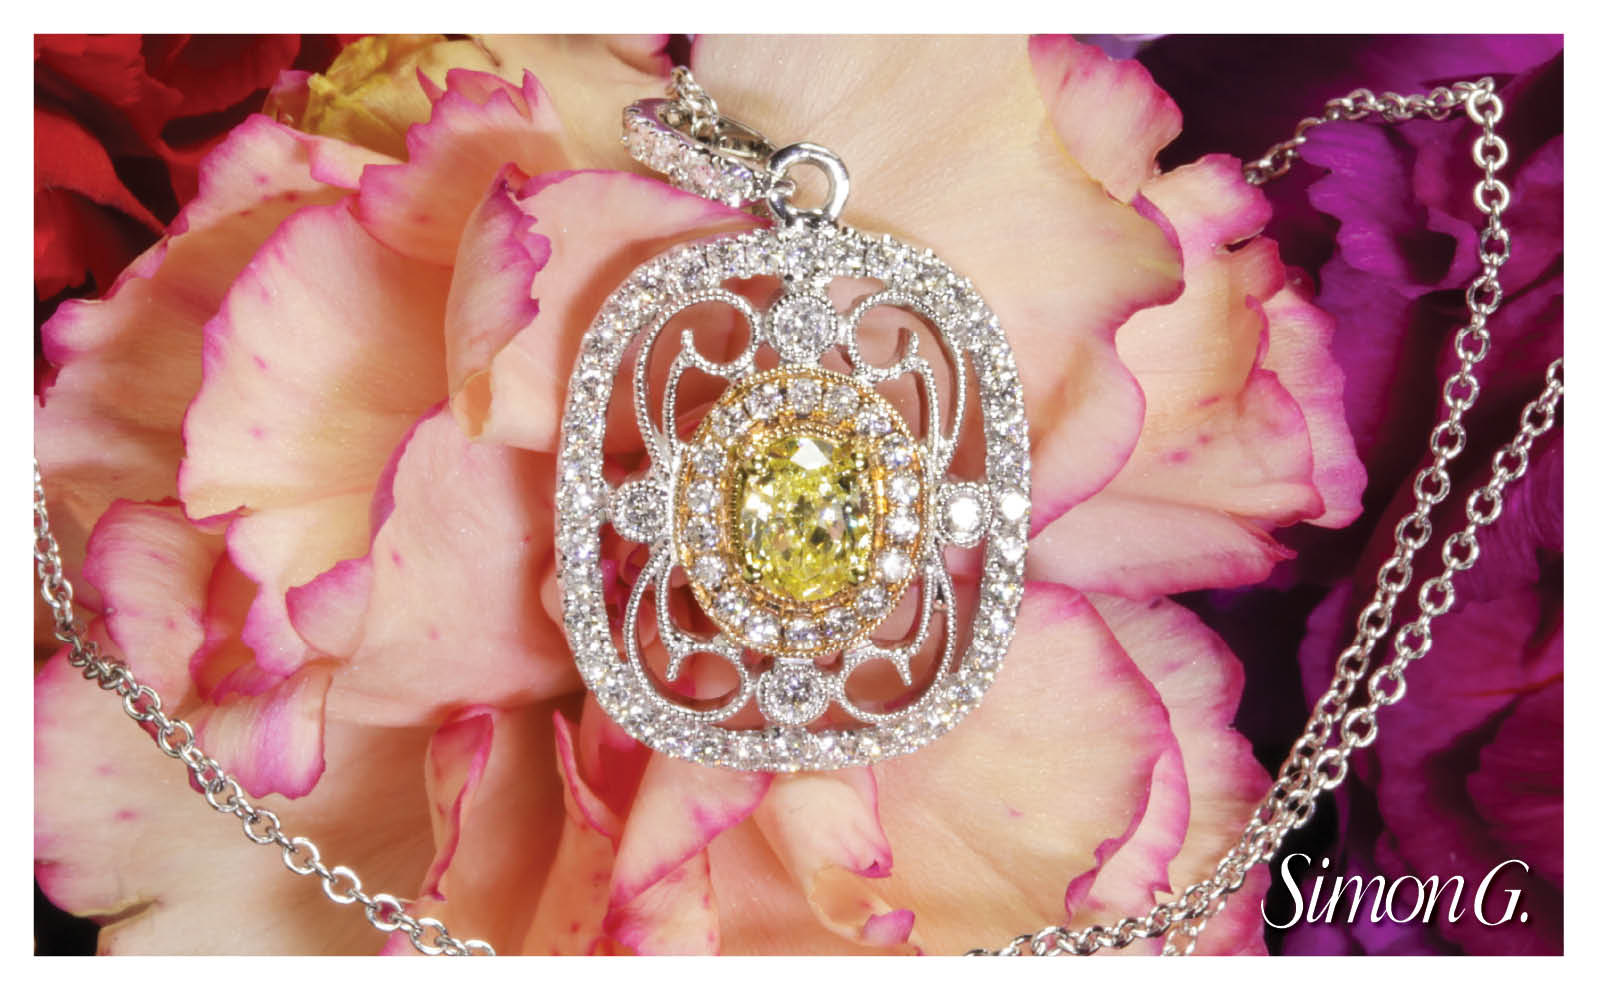 Simon G Jewelry 2015 Jewelry Calendar Whiteflash